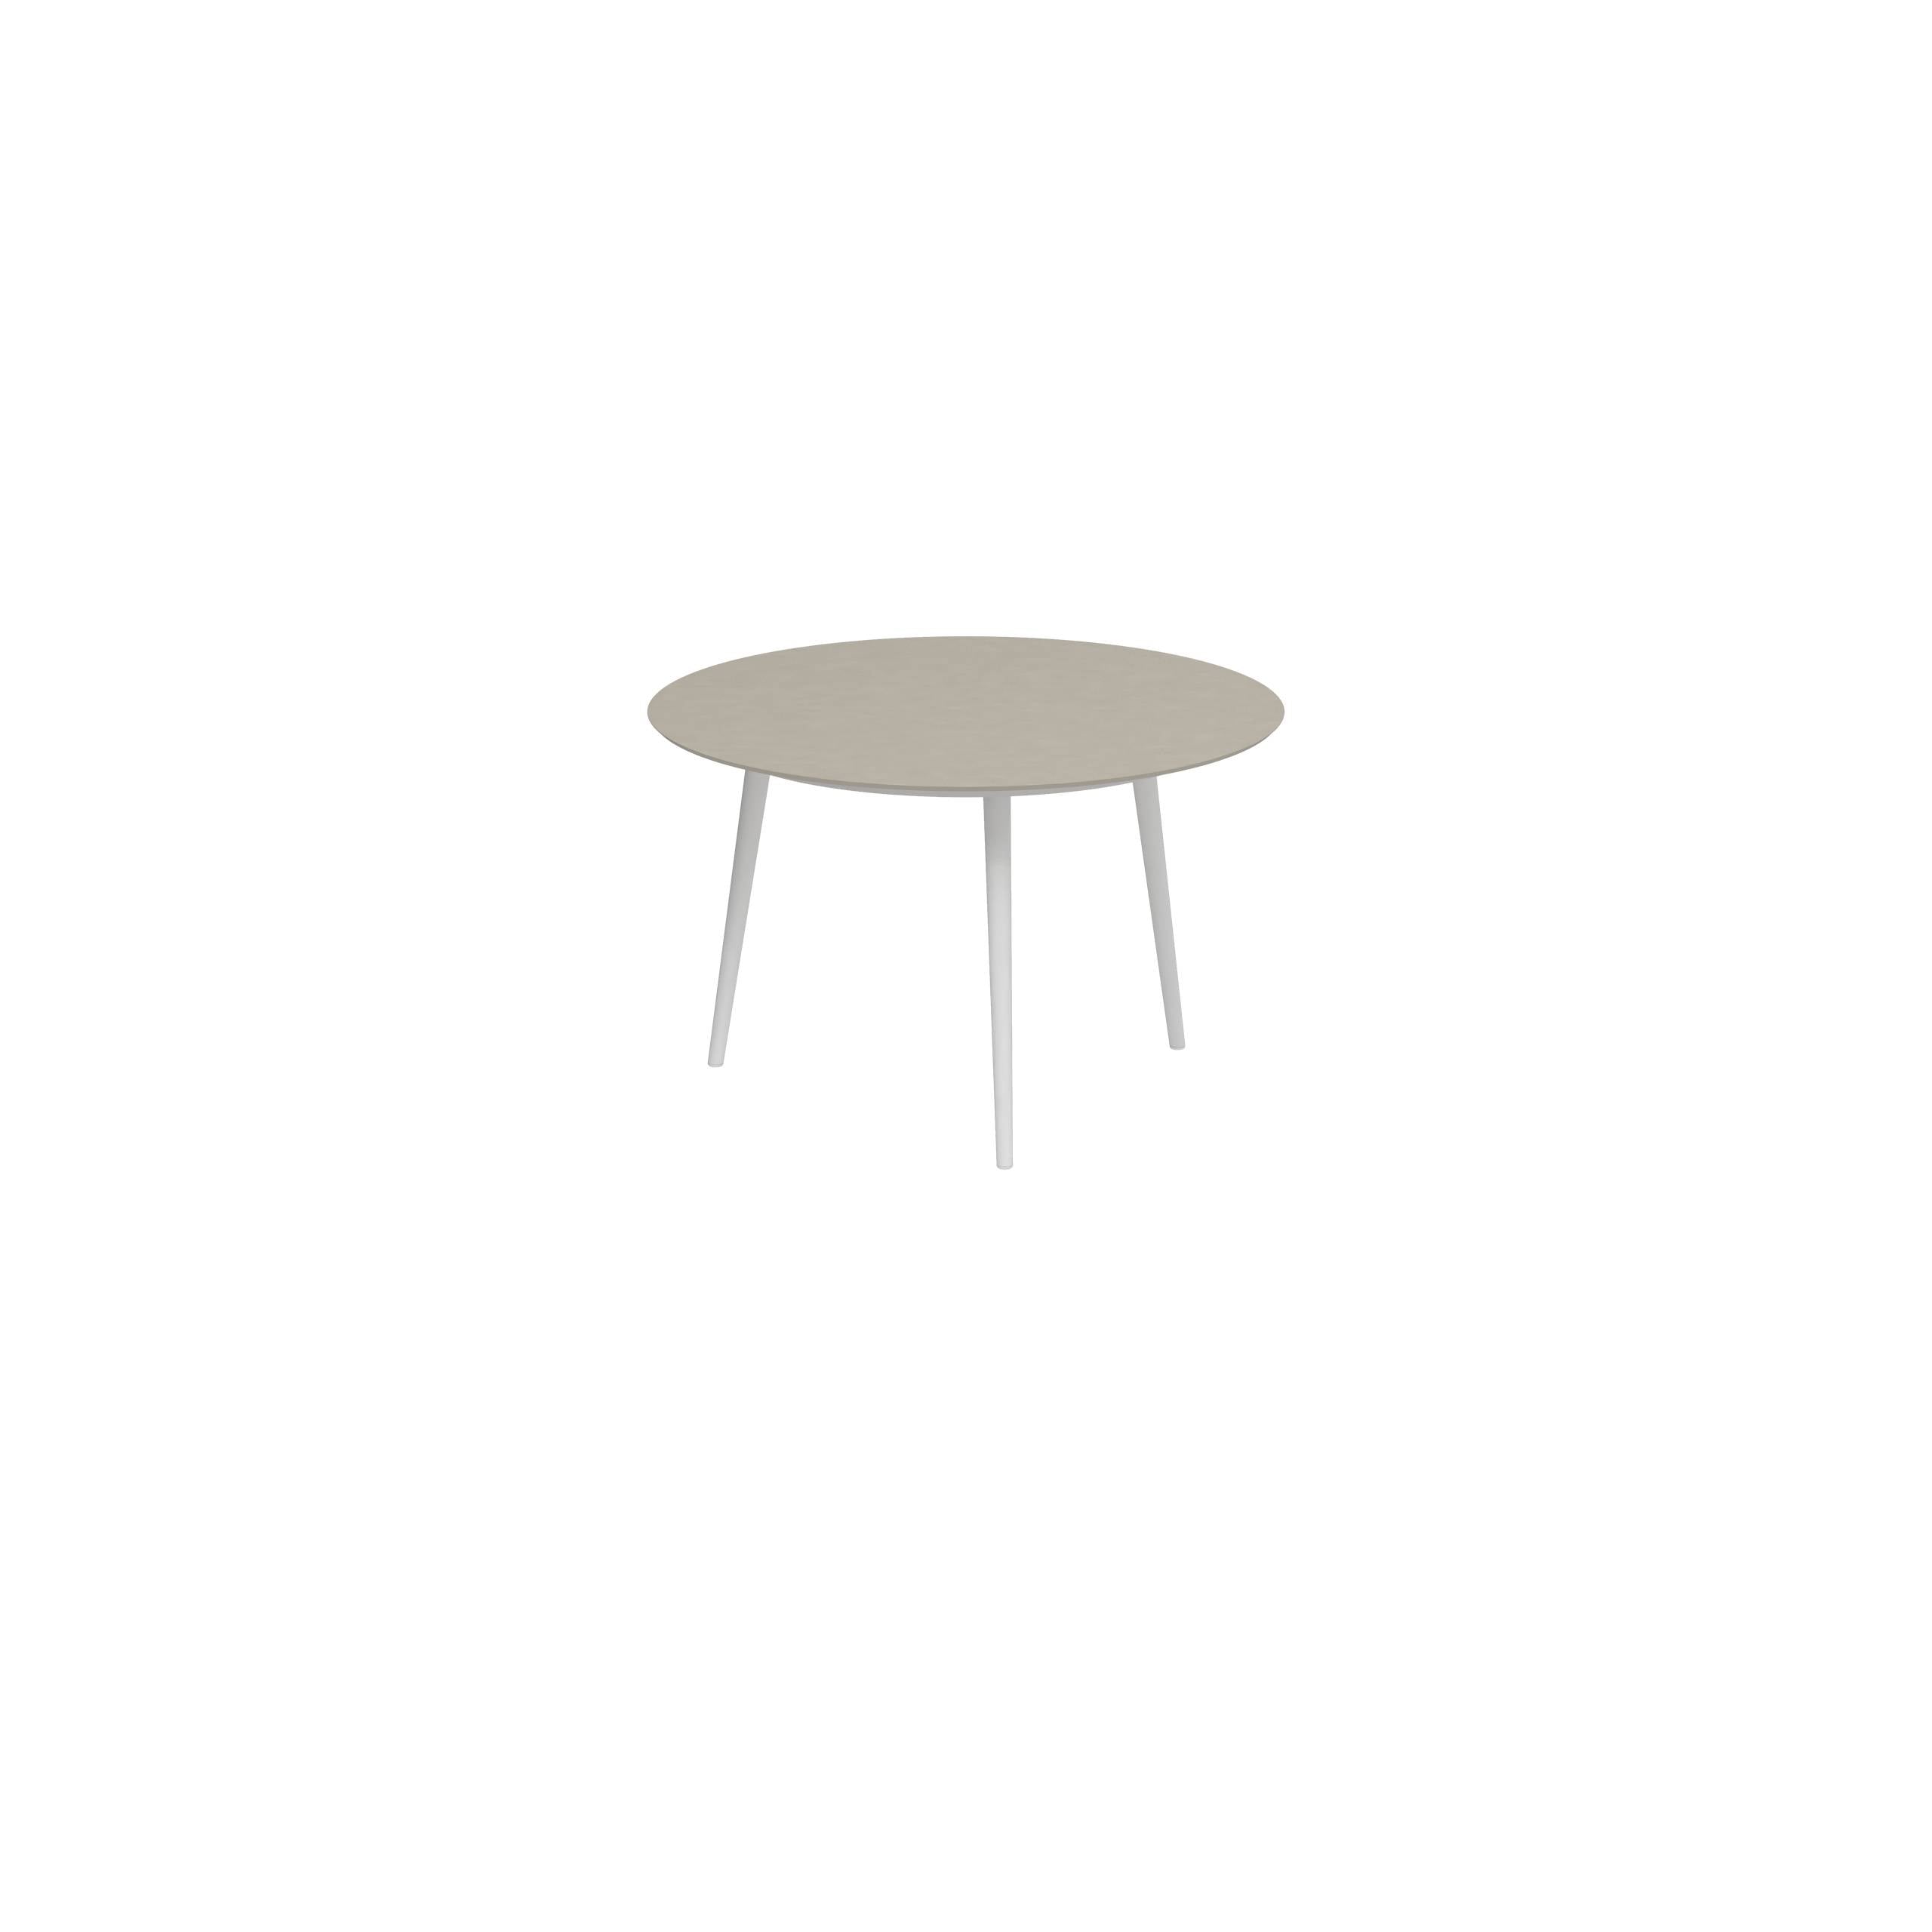 Styletto Standard Dining Table Ø 120cm Alu Legs White Ceramic Top Pearl Grey